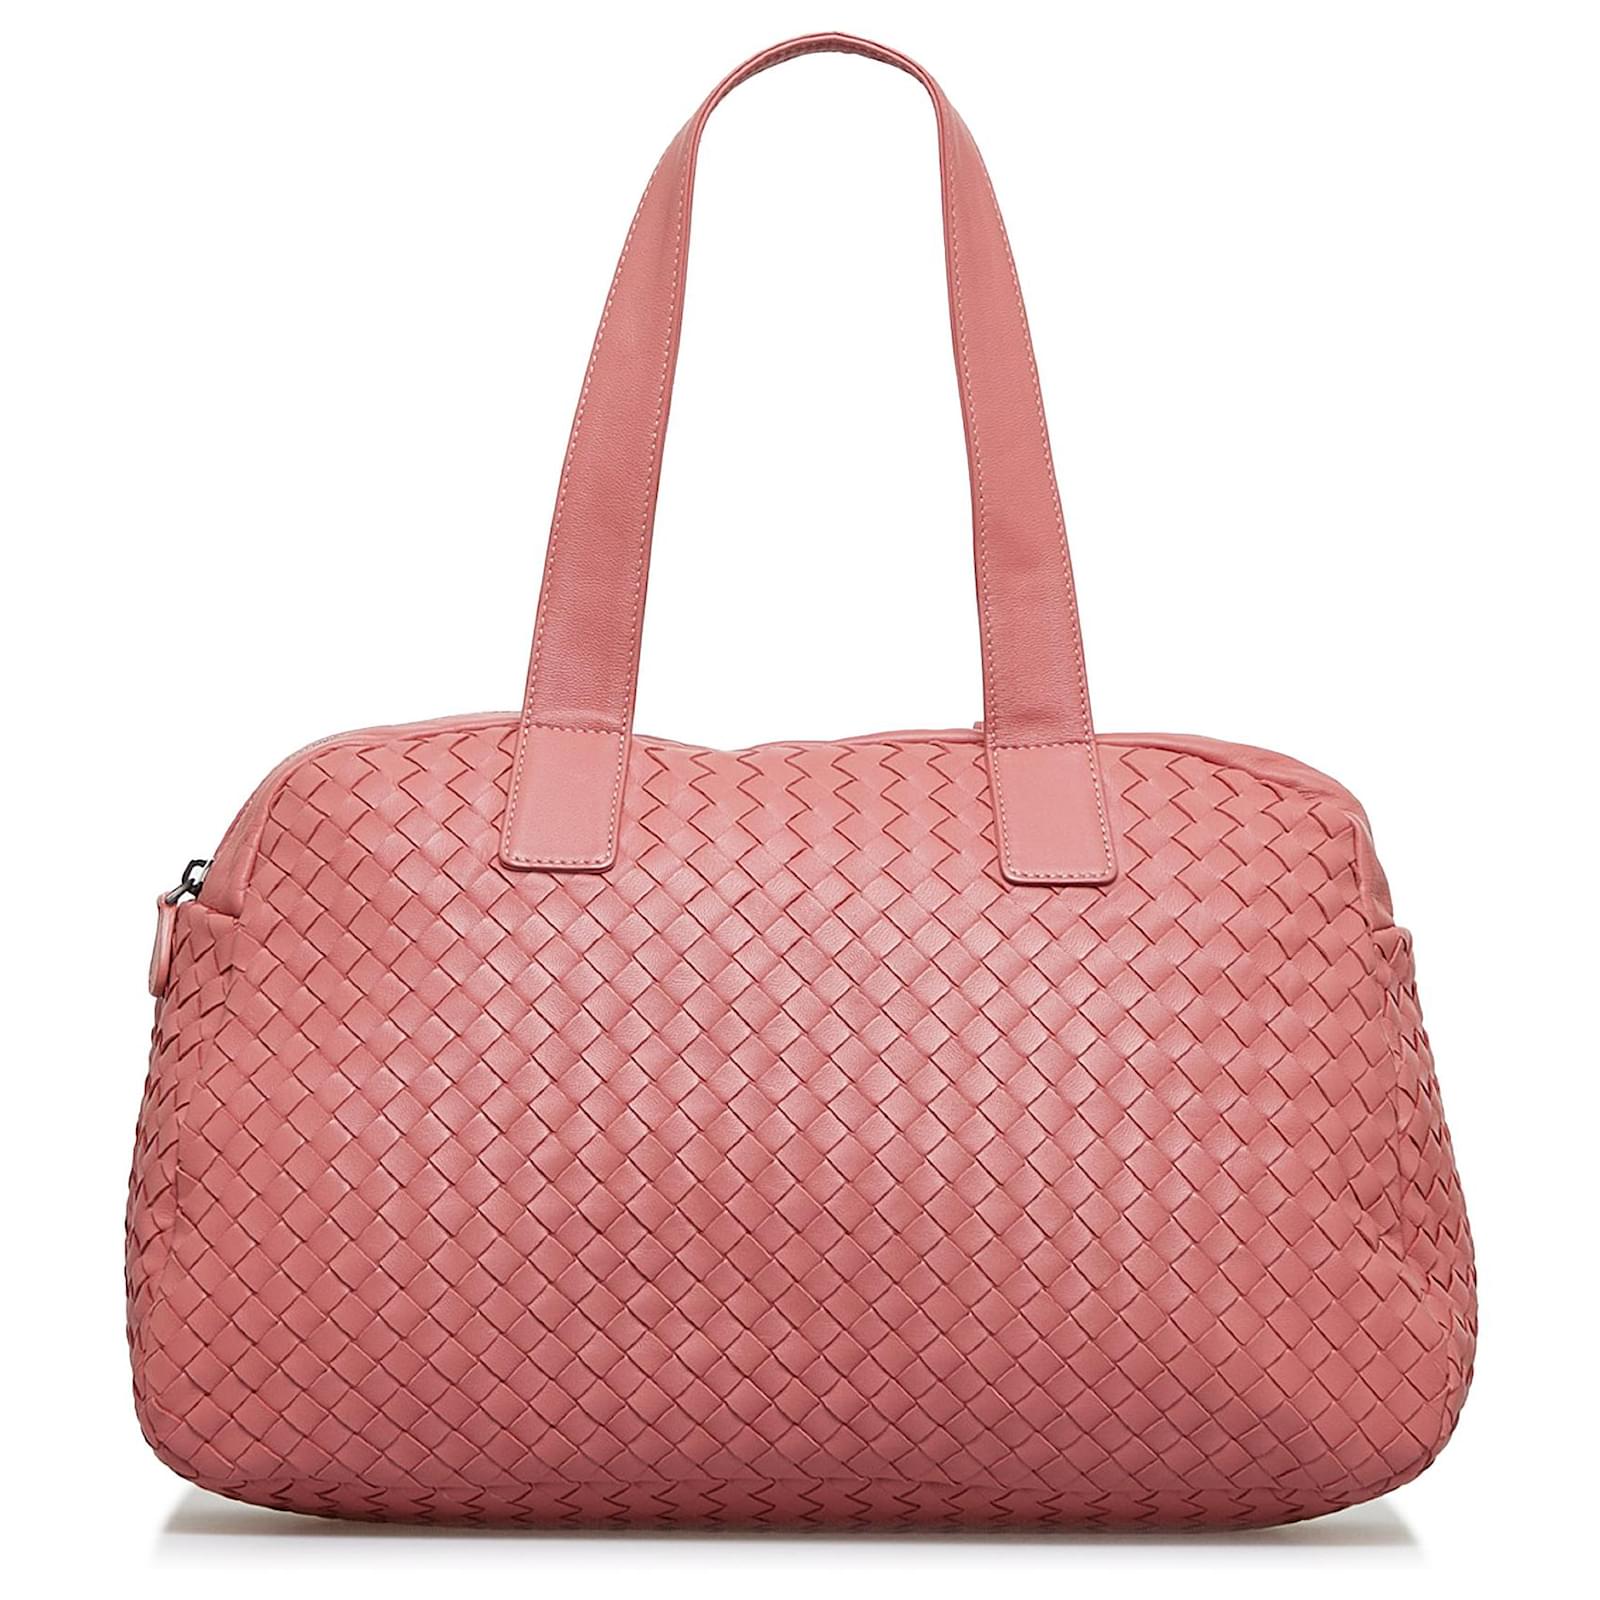 Bottega Veneta Pink Intrecciato Leather Shoulder Bag Pony-style